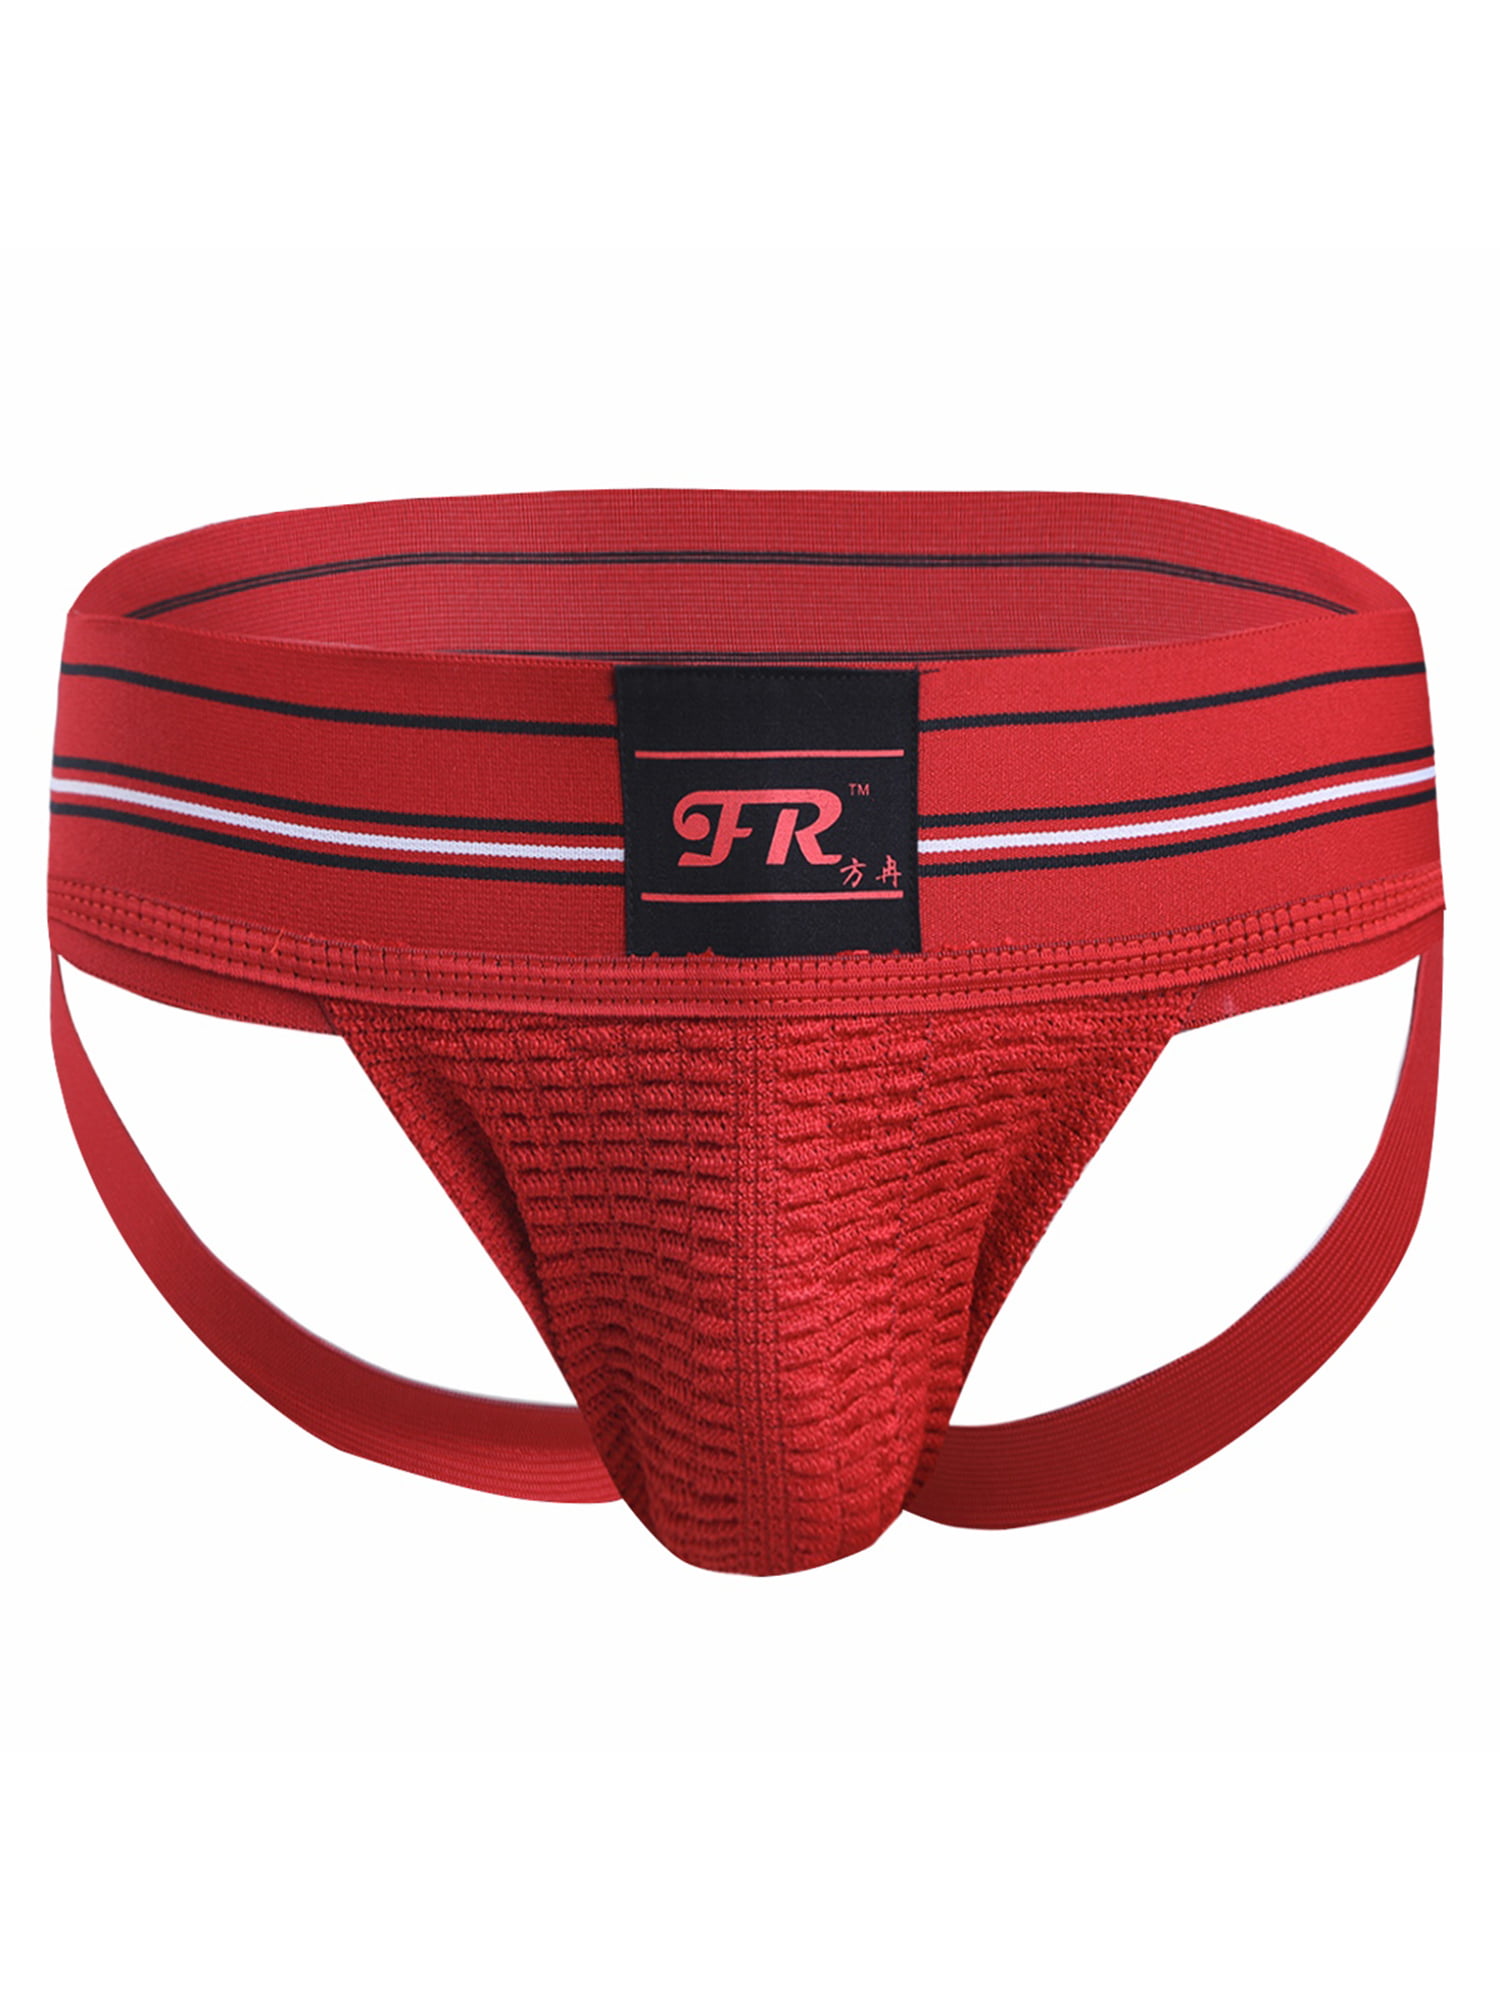 US Mens Athletic Supporter Jockstrap Sport Briefs Bulge Pouch Bikini Underwear